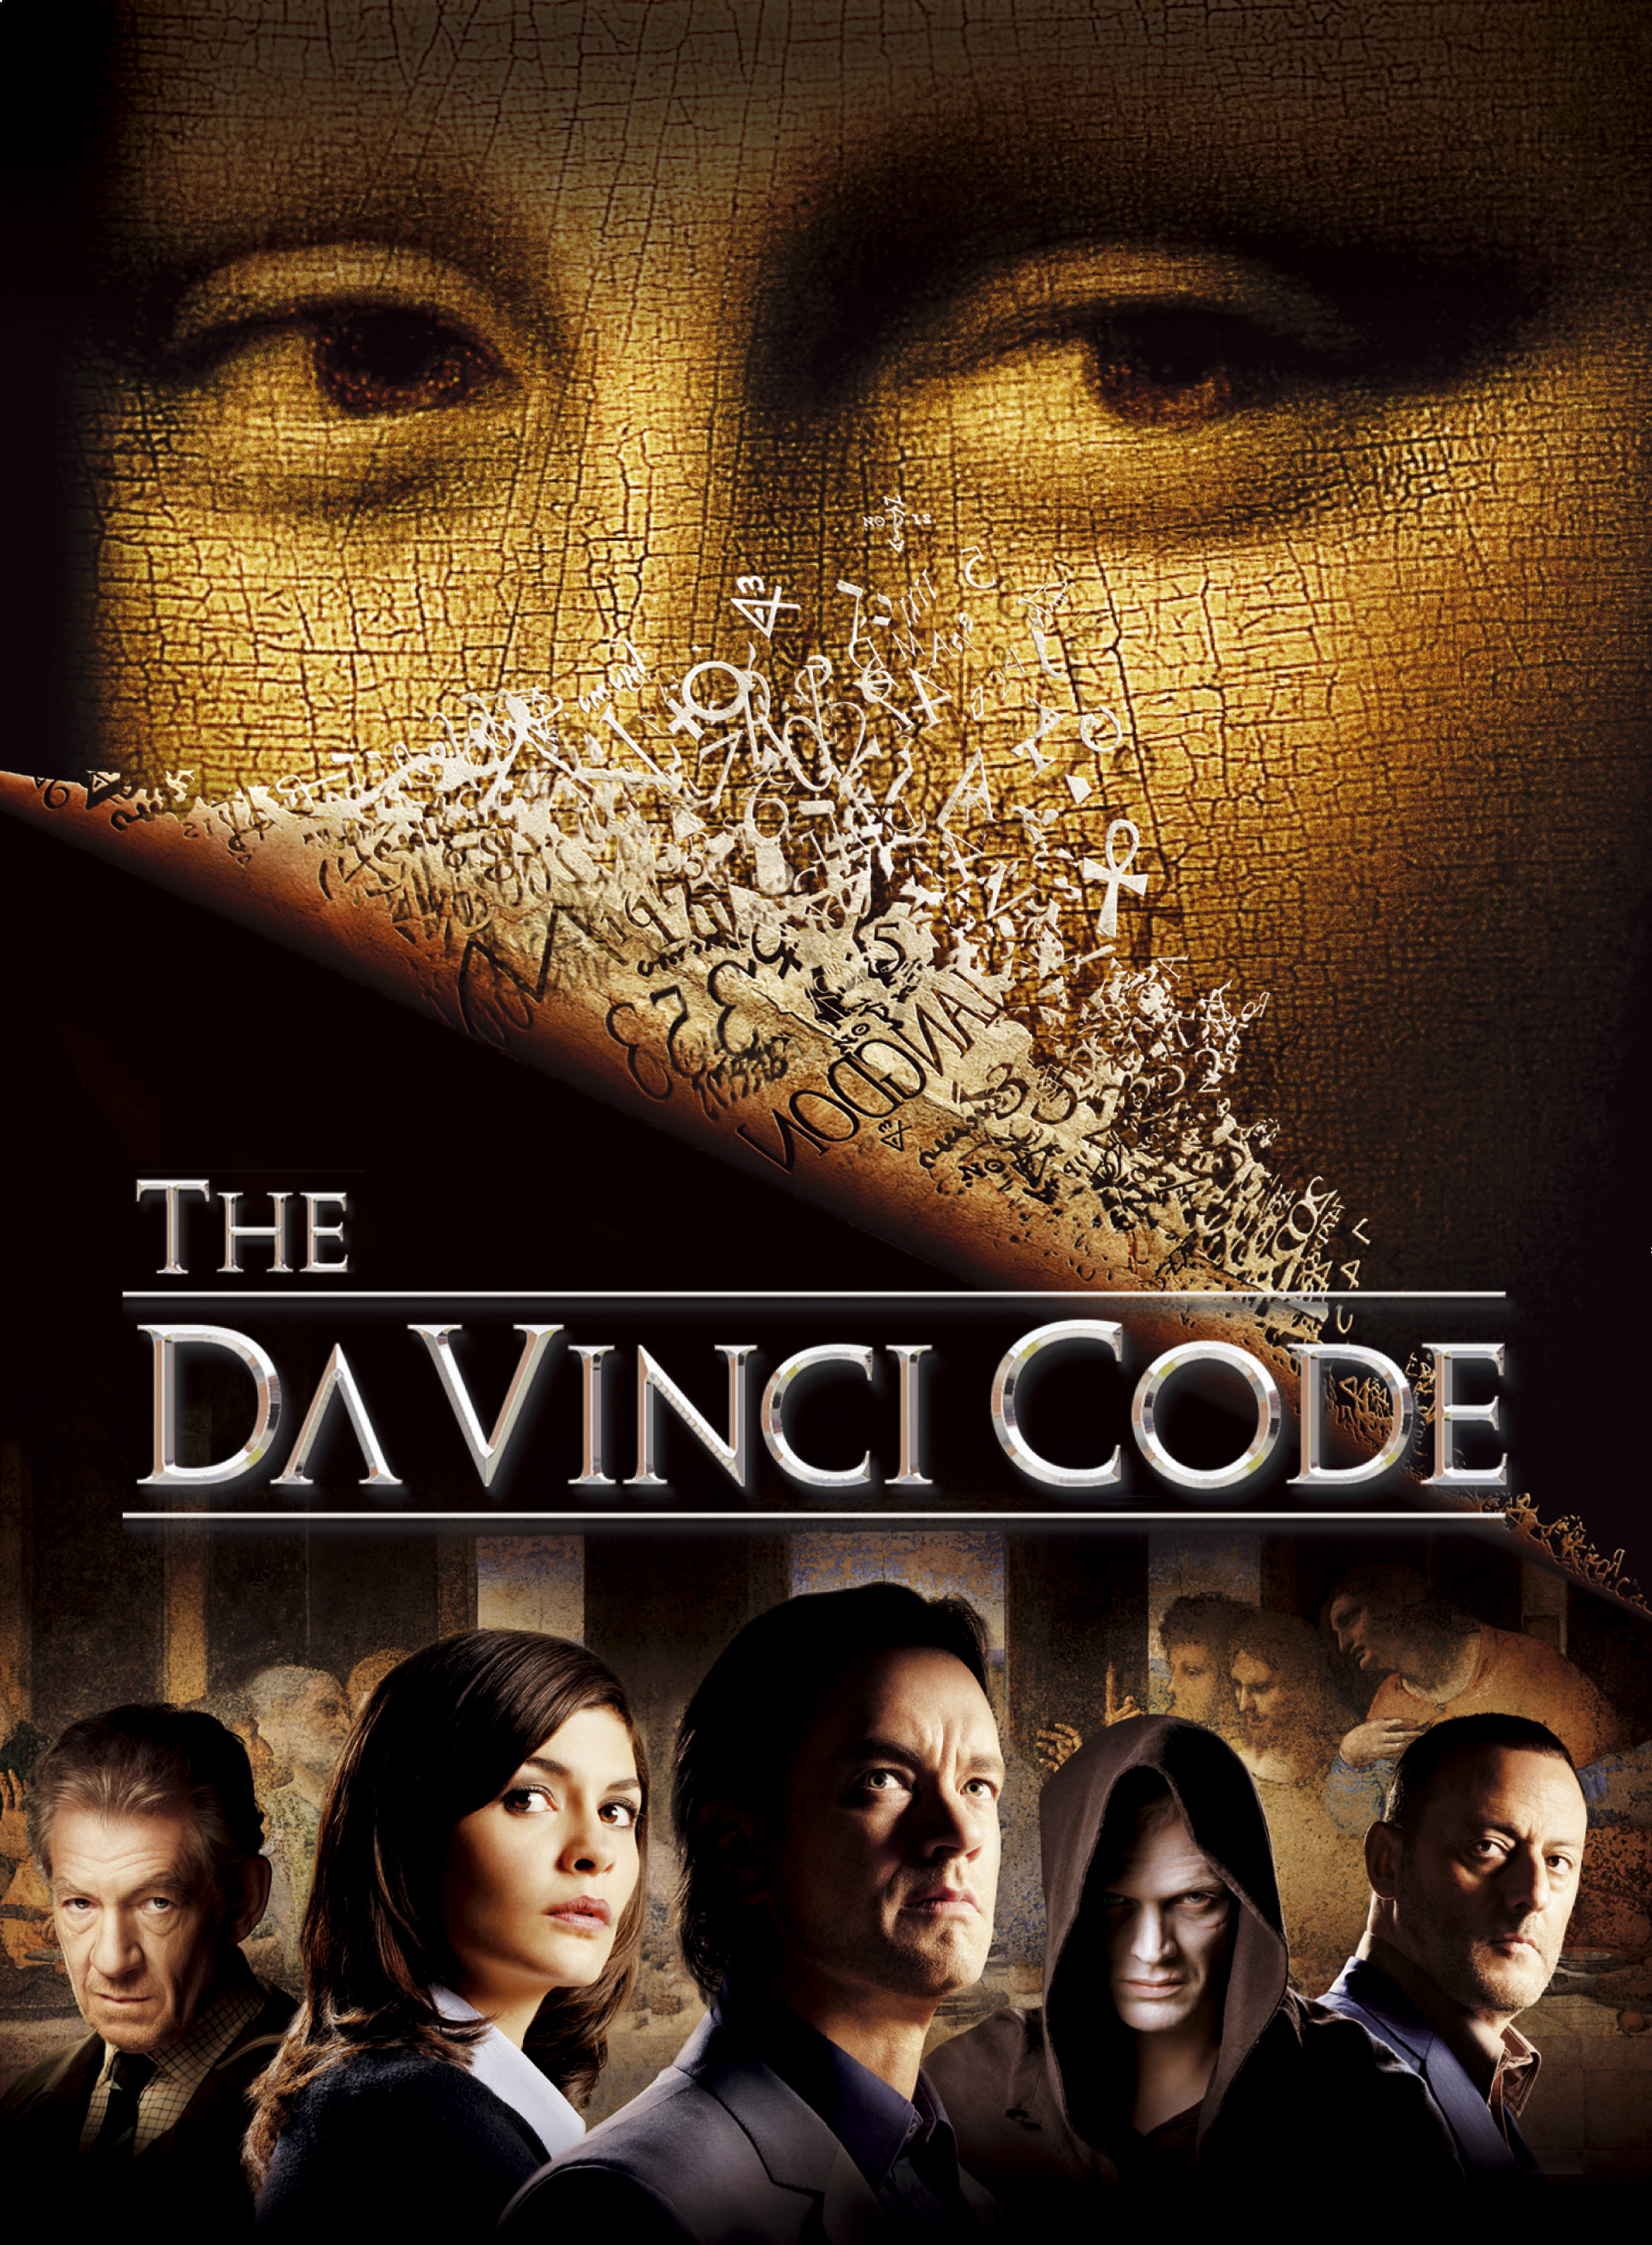 da vinci code movie explained